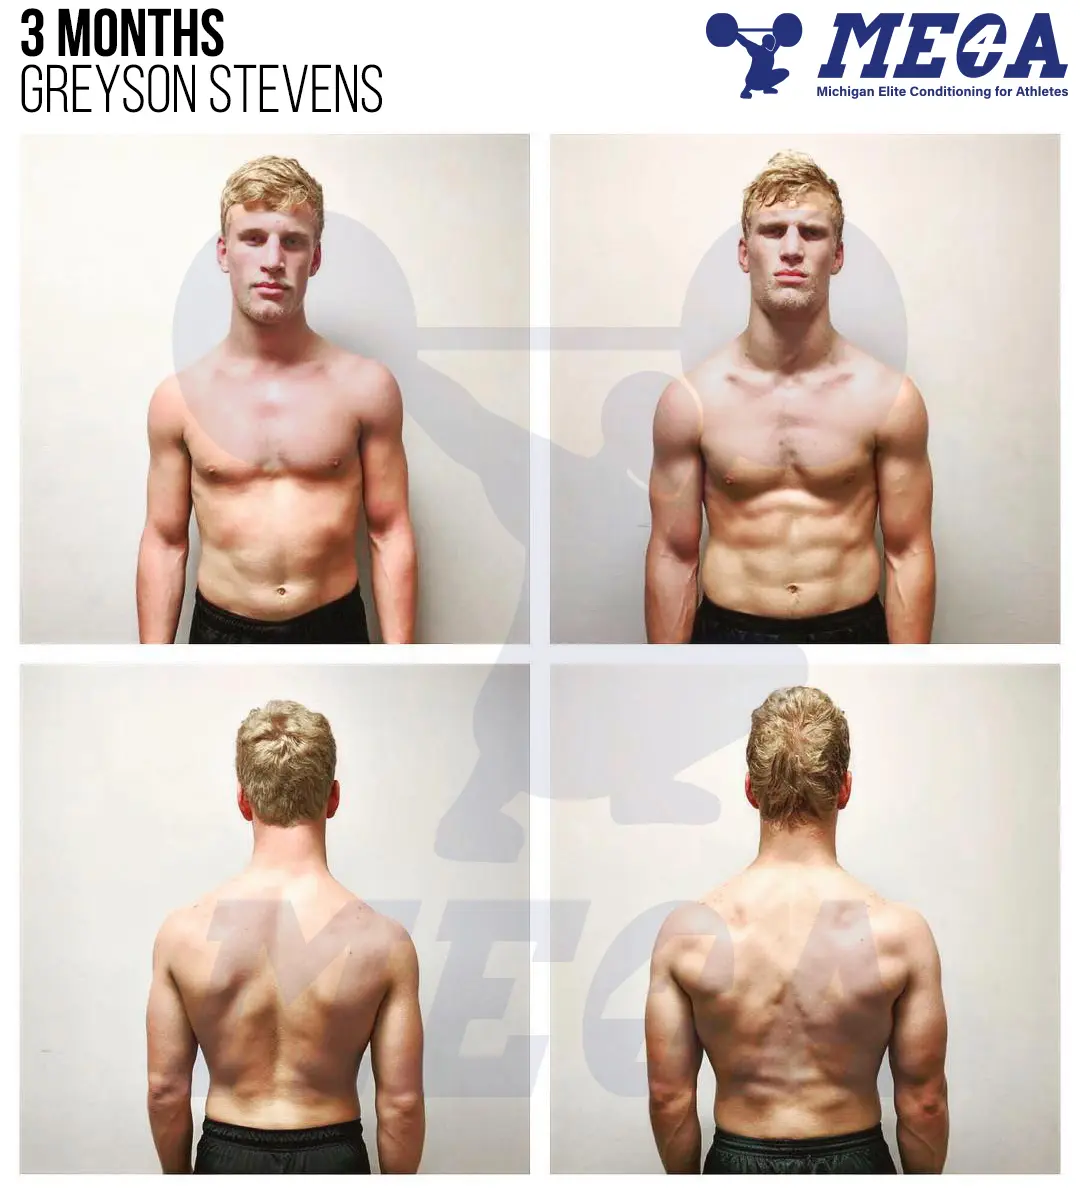 Greyson Stevens